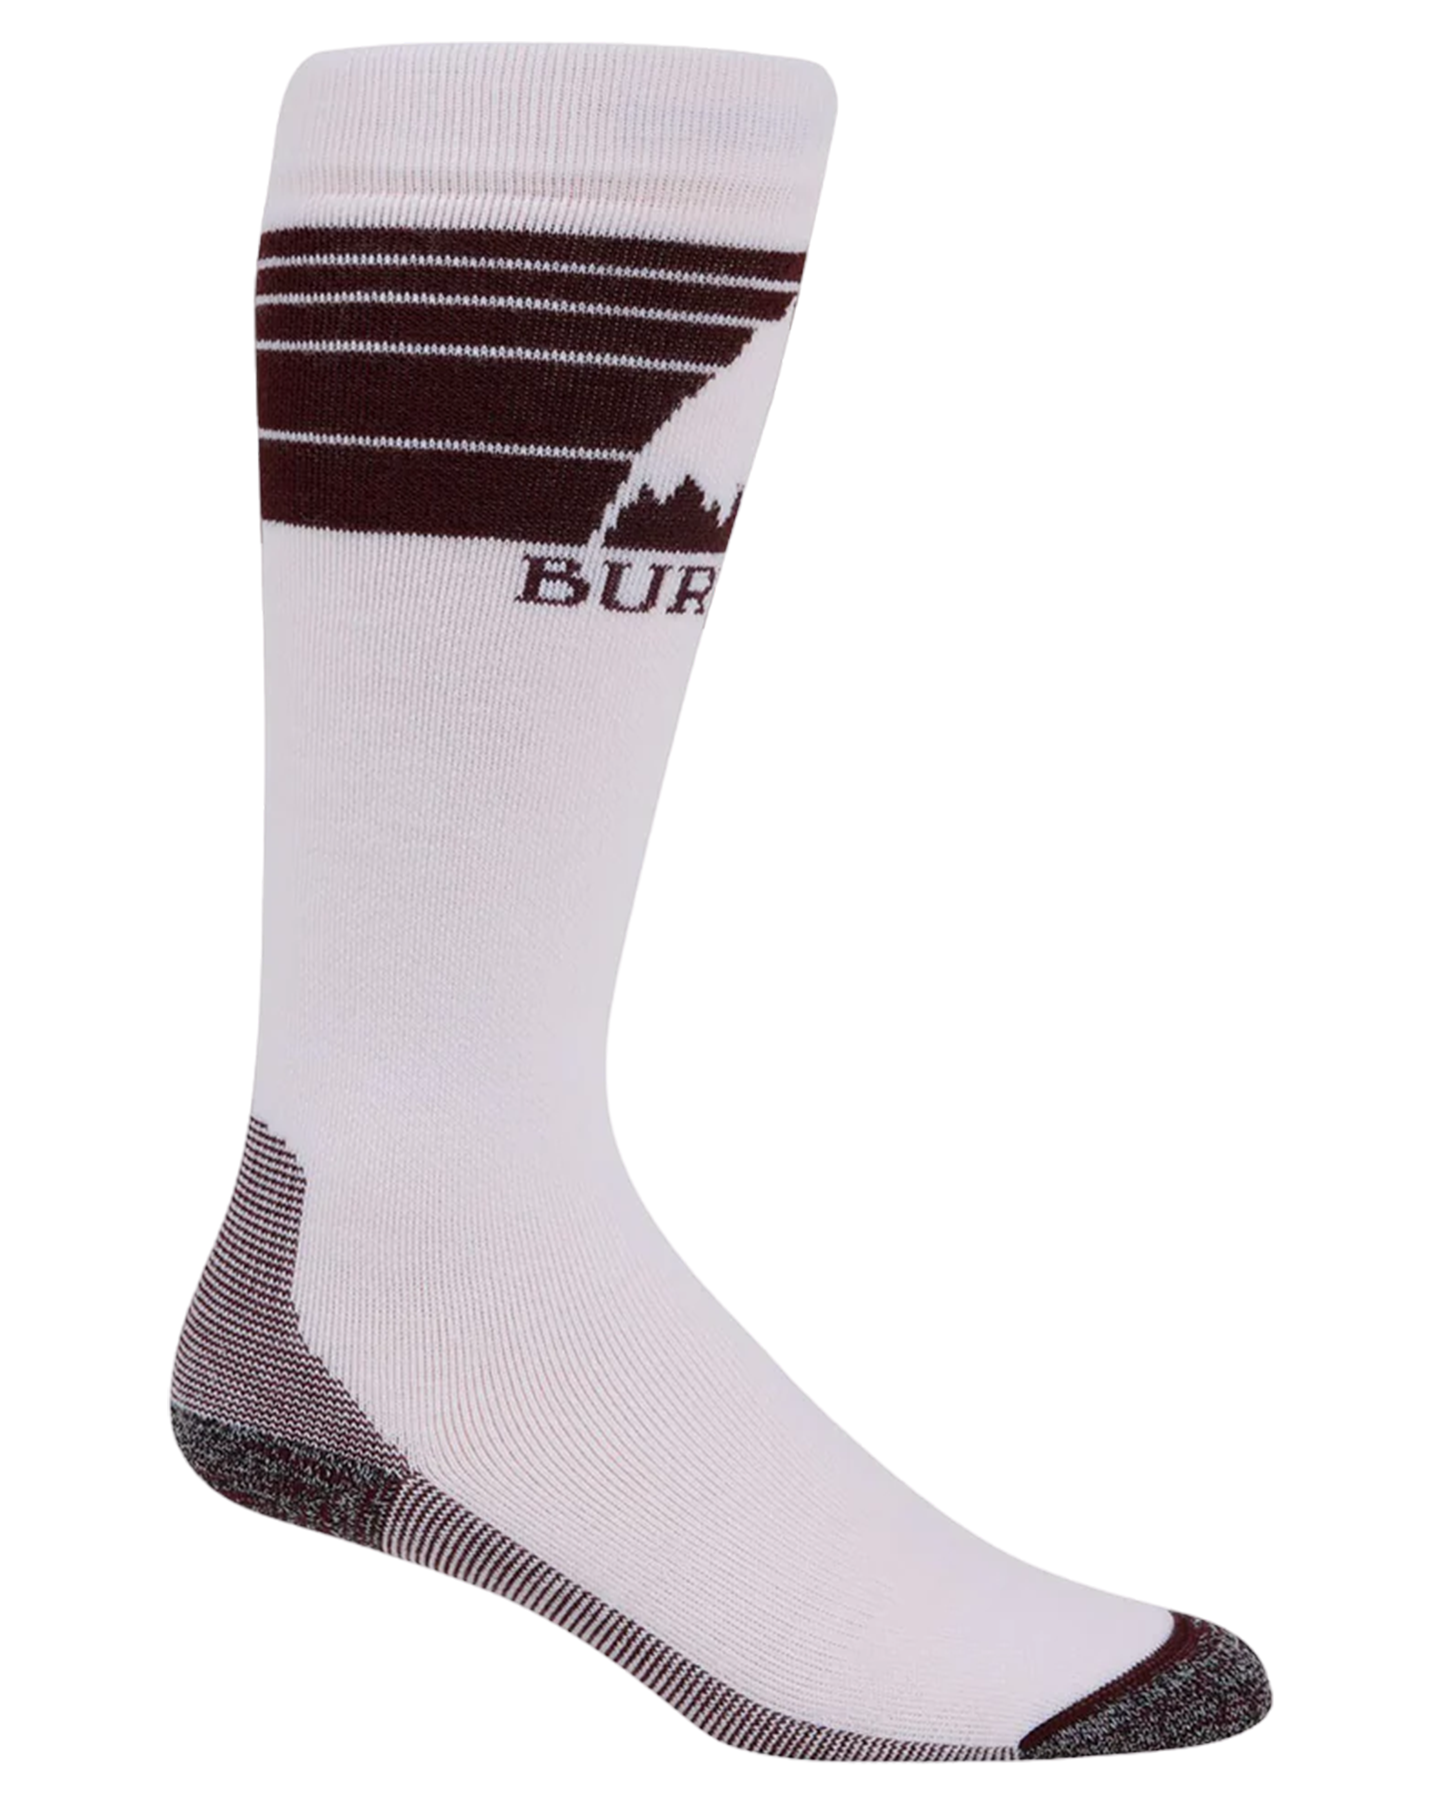 Burton Women's Emblem Midweight Socks - Stout White Socks - Trojan Wake Ski Snow